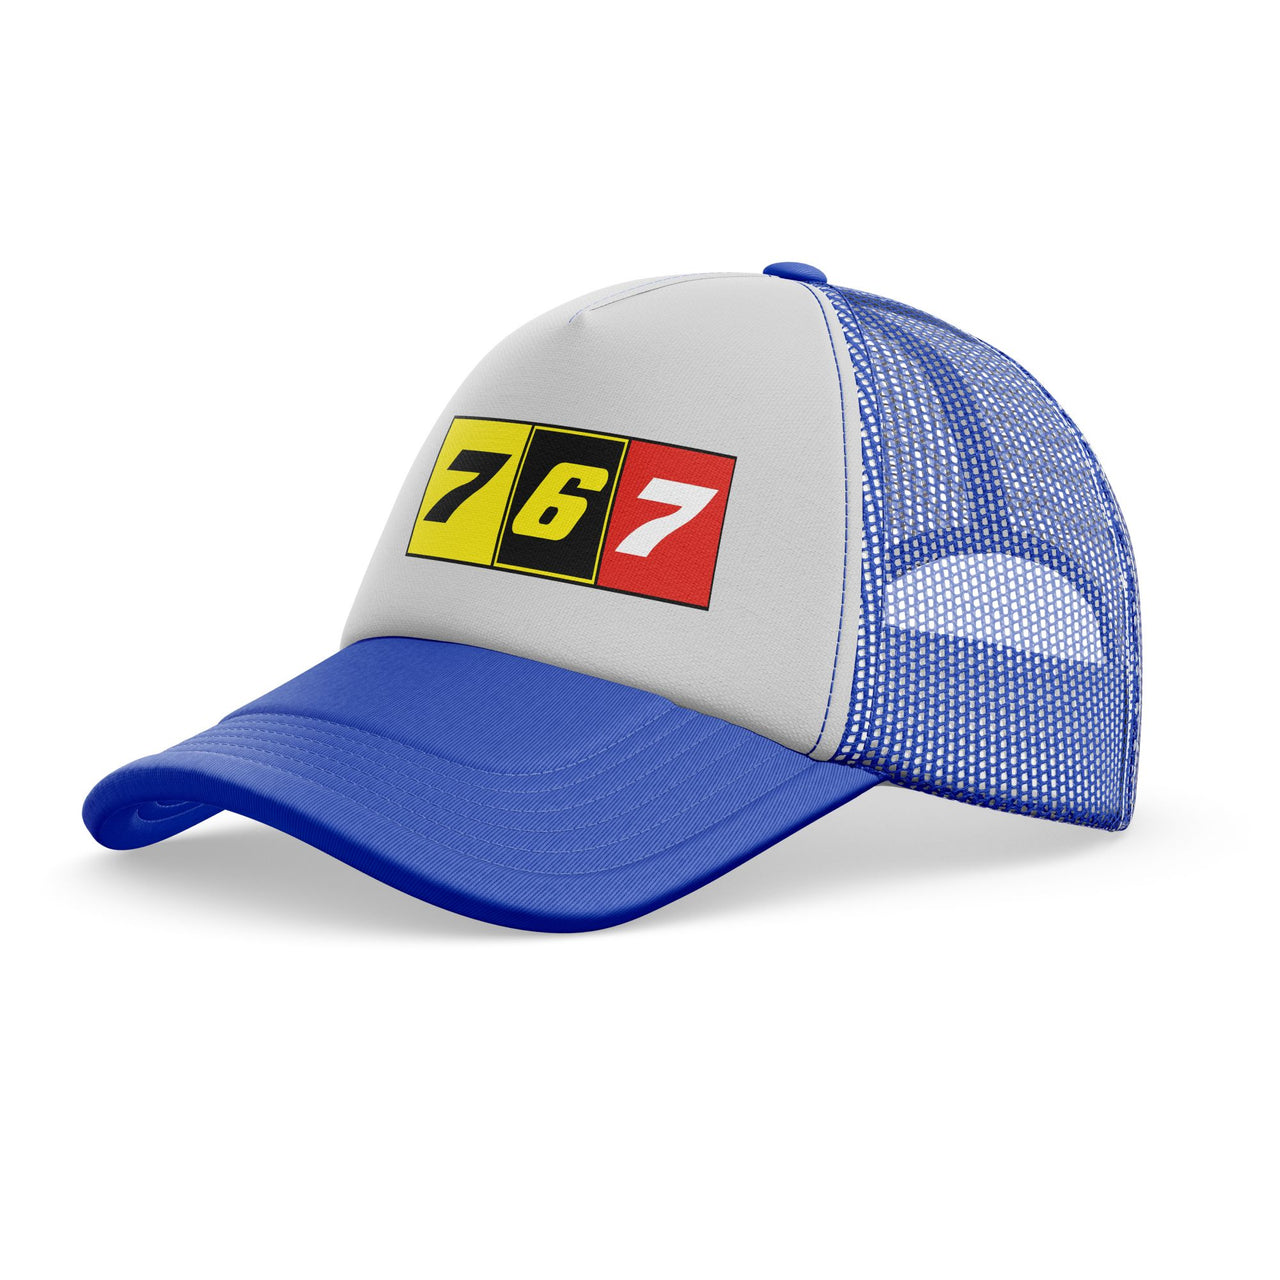 Flat Colourful 767 Designed Trucker Caps & Hats